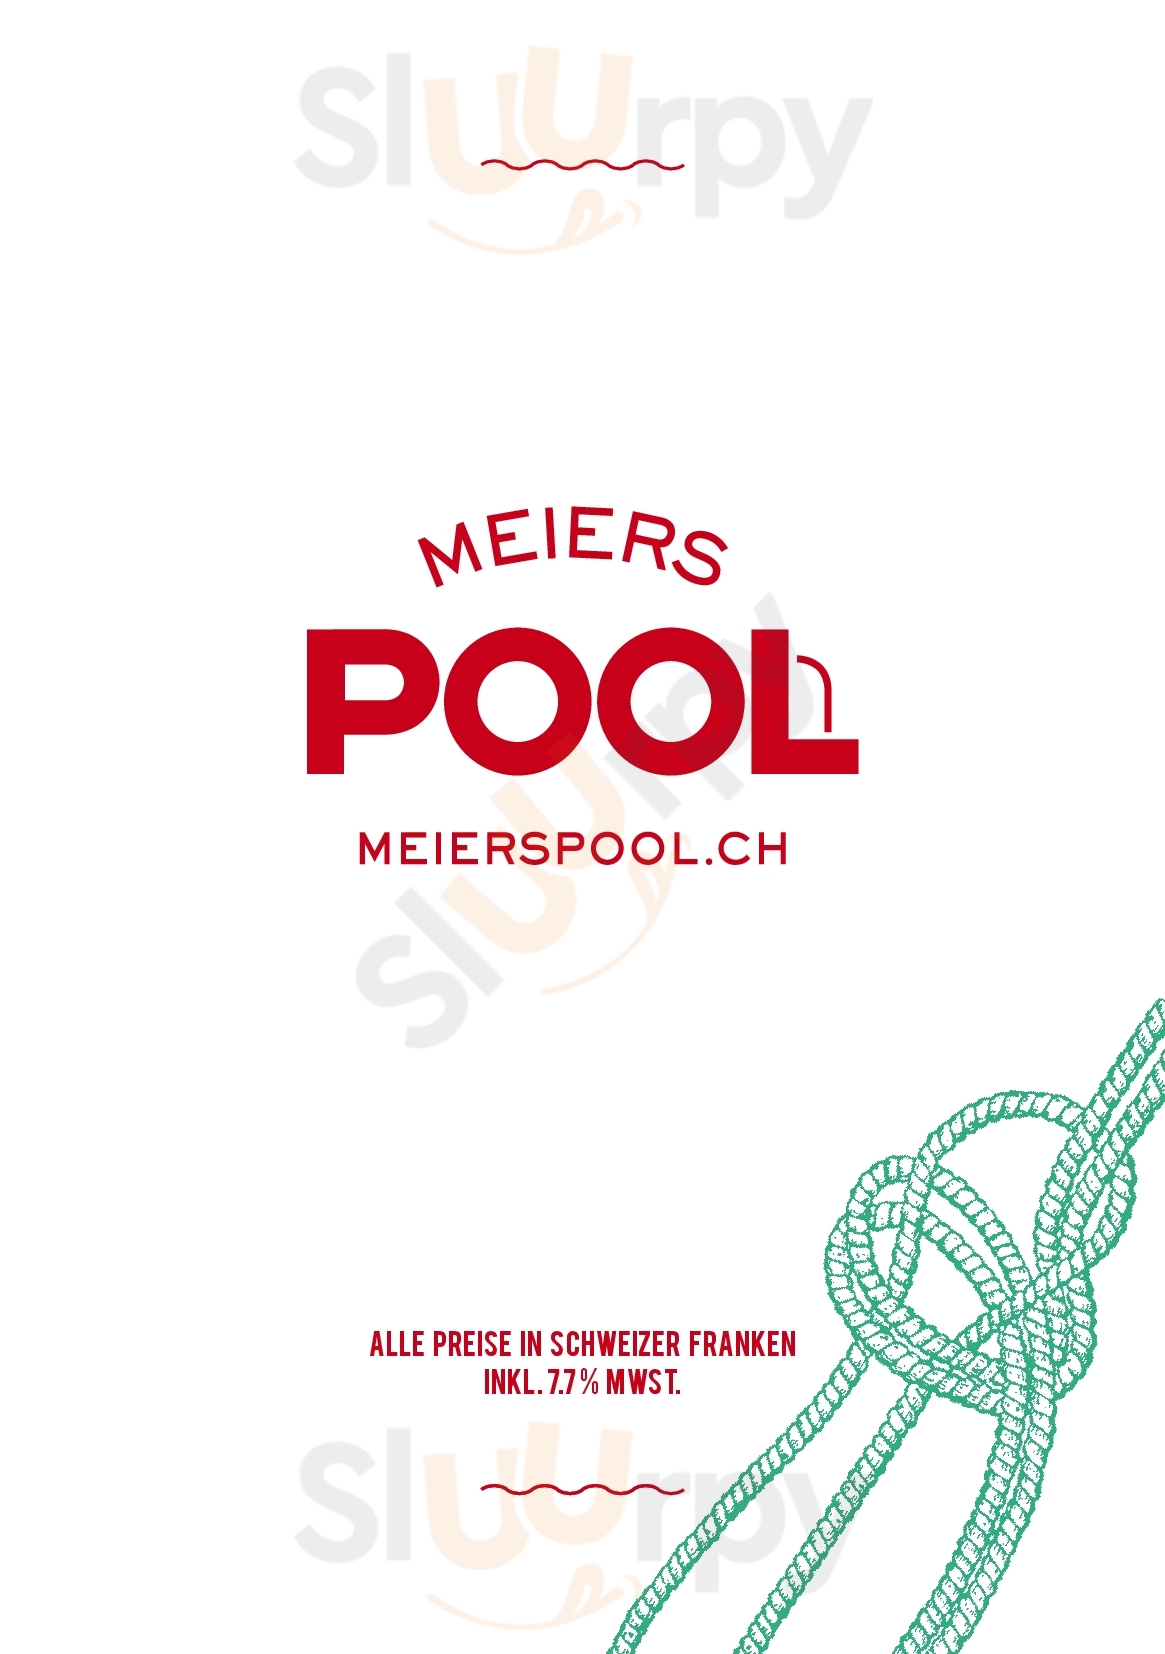 Meier's Pool Schaffhausen Menu - 1